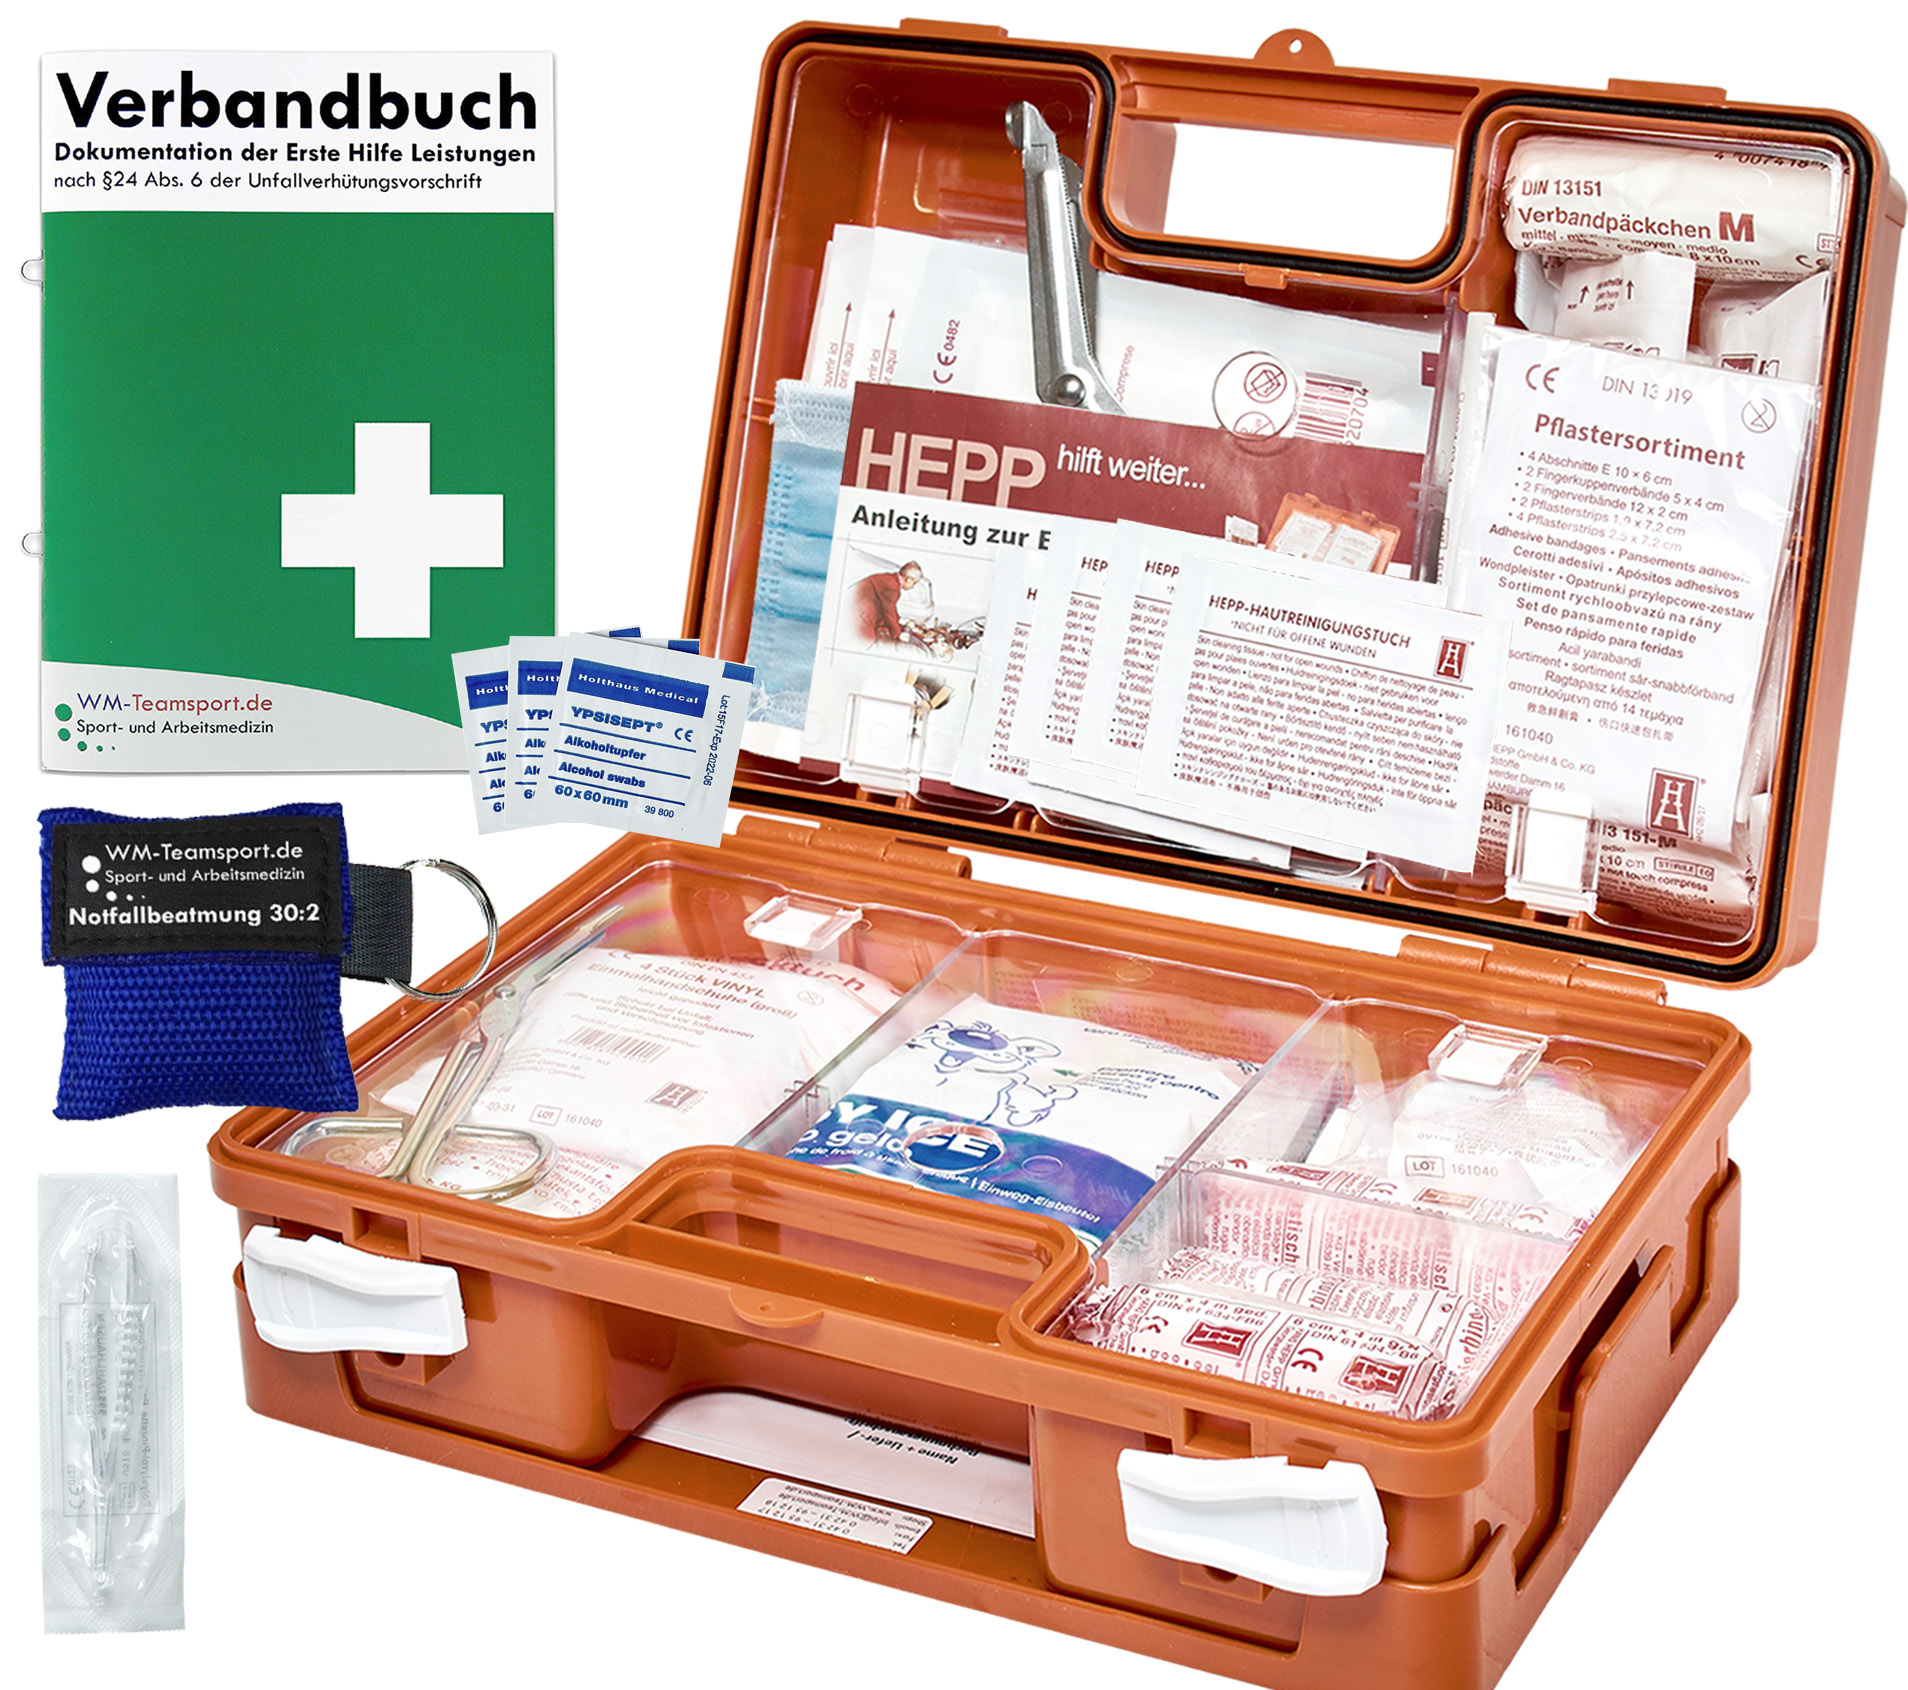  Erste-Hilfe-koffer DIN 13157 sanitätskoffer